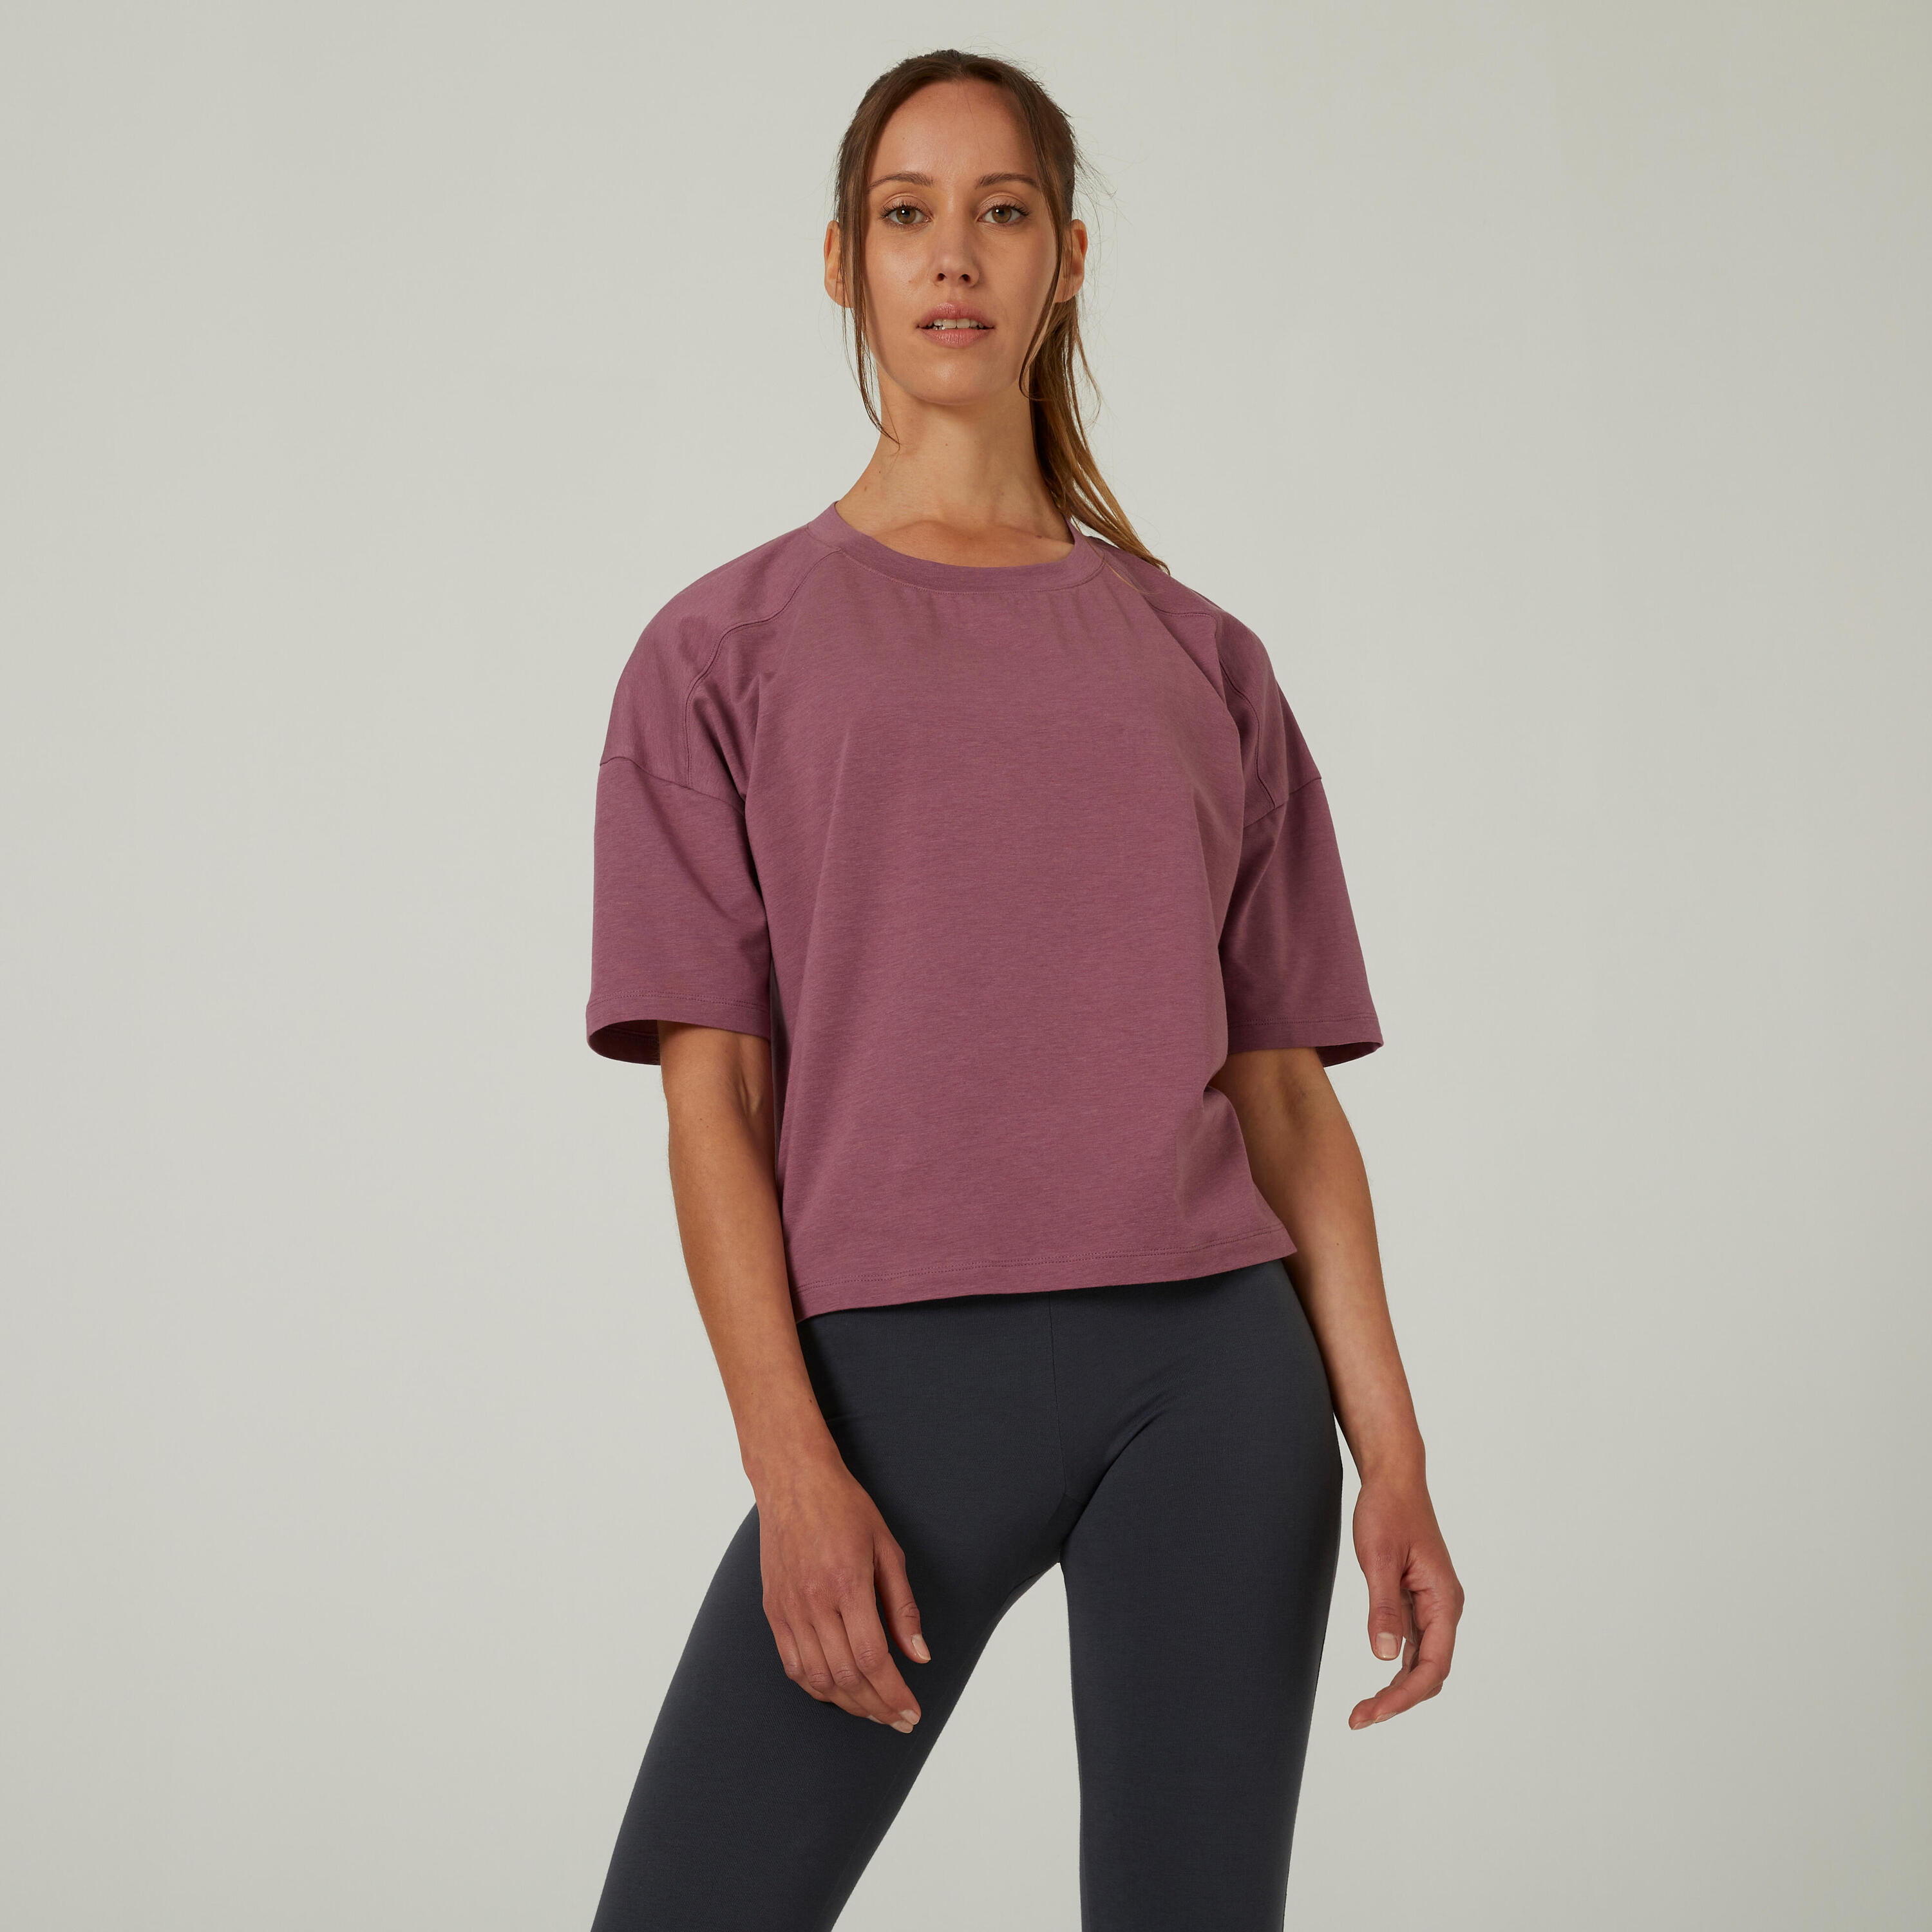 DOMYOS Women's Loose-Fit Fitness T-Shirt 520 - Grape